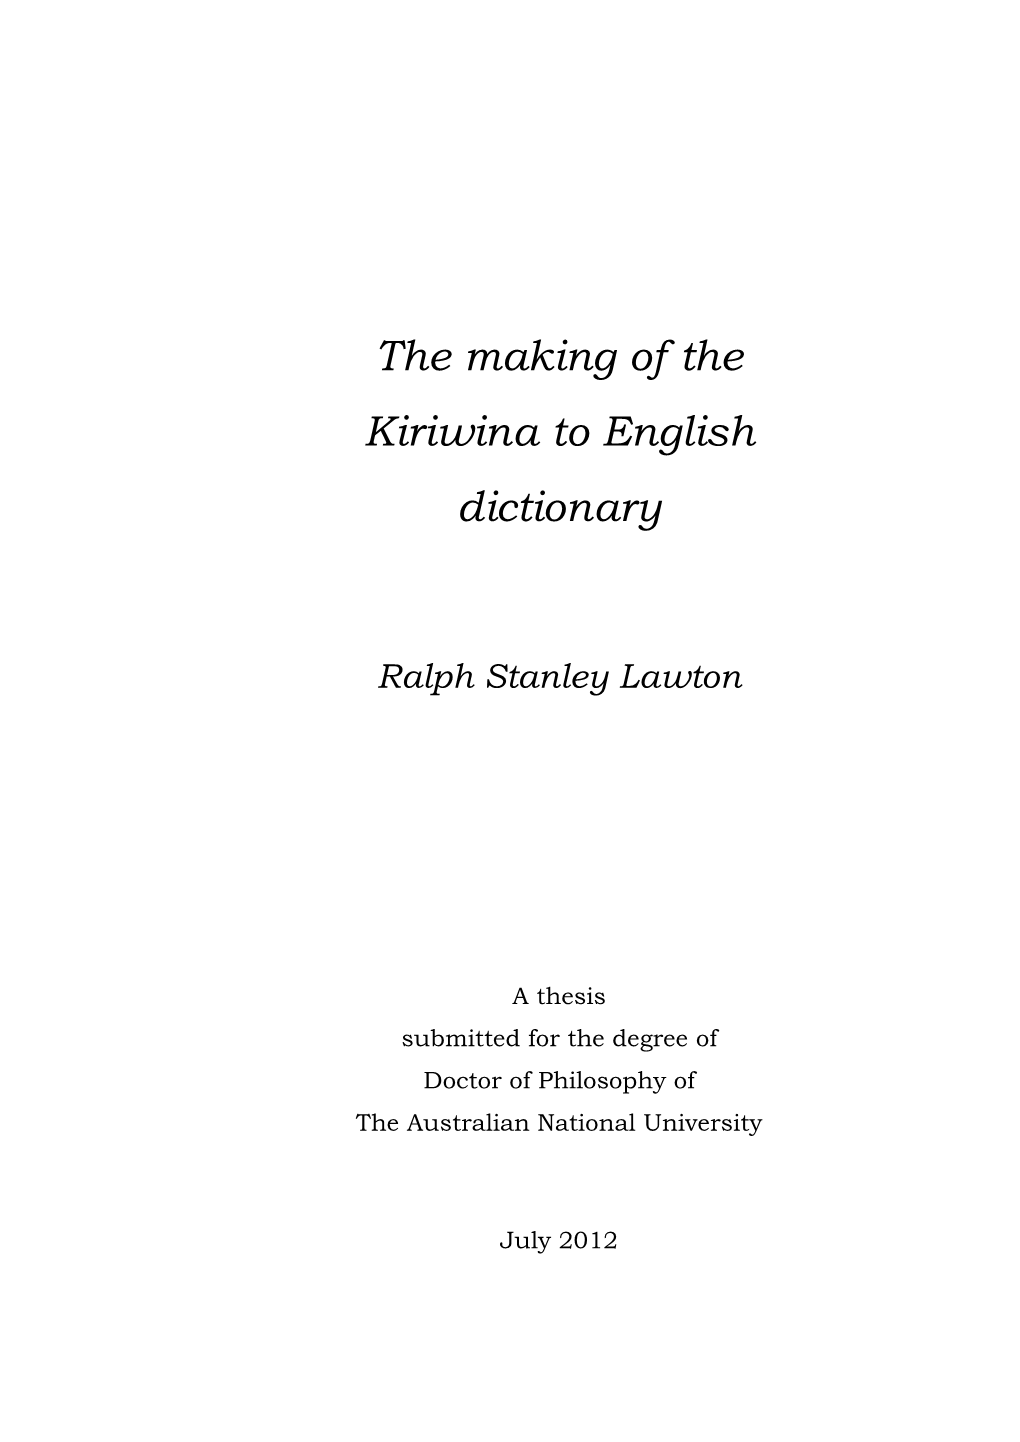 The Making of the Kiriwina to English Dictionary